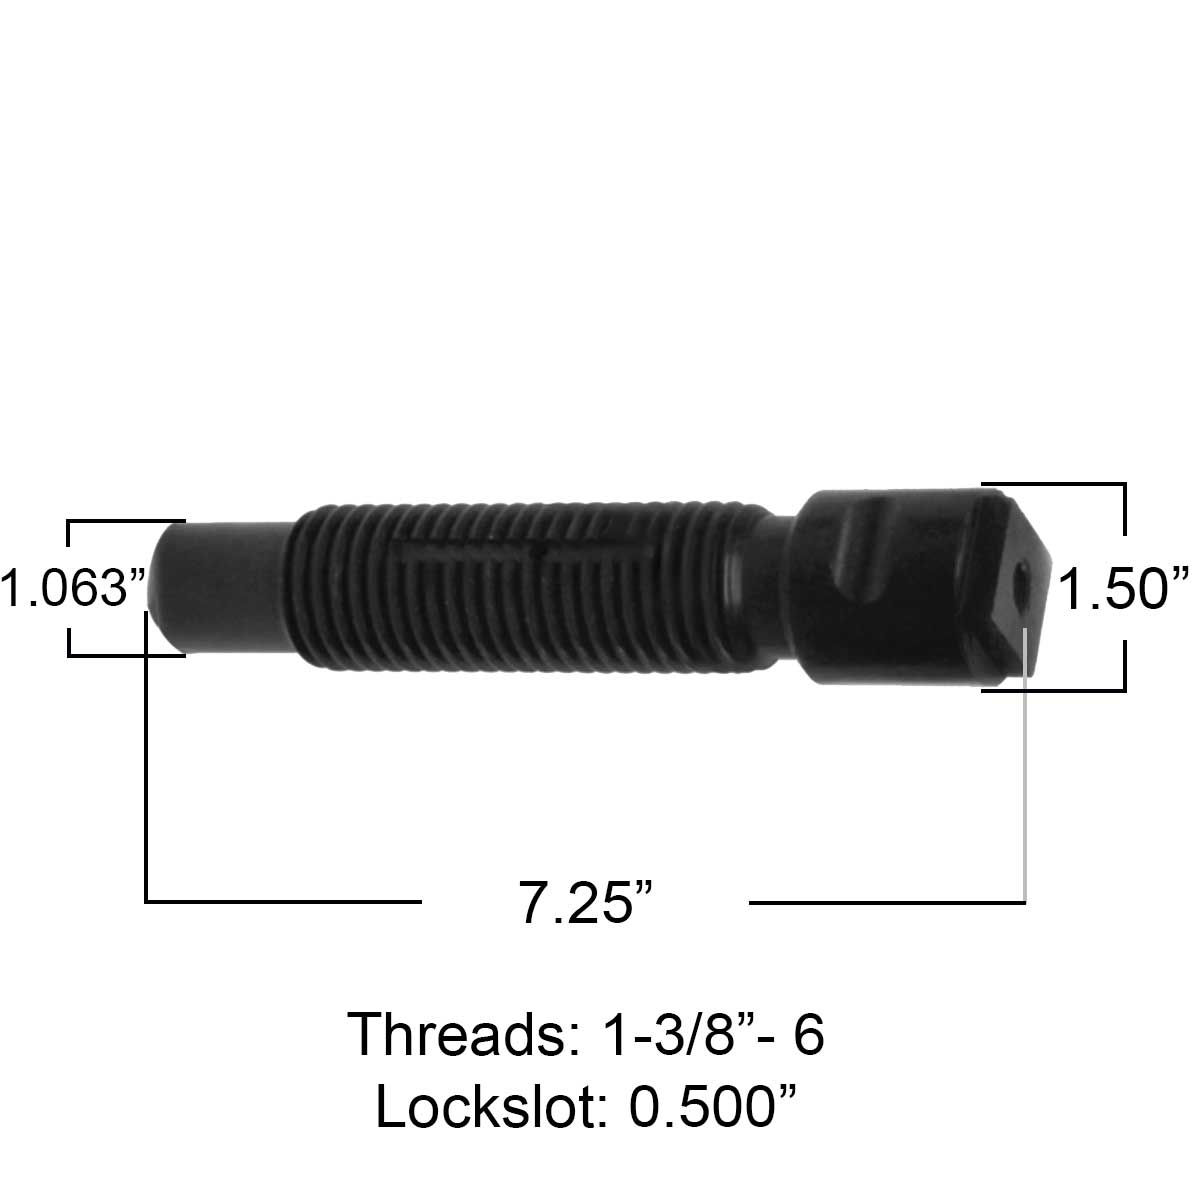 International shackle pin M5160 measurements.